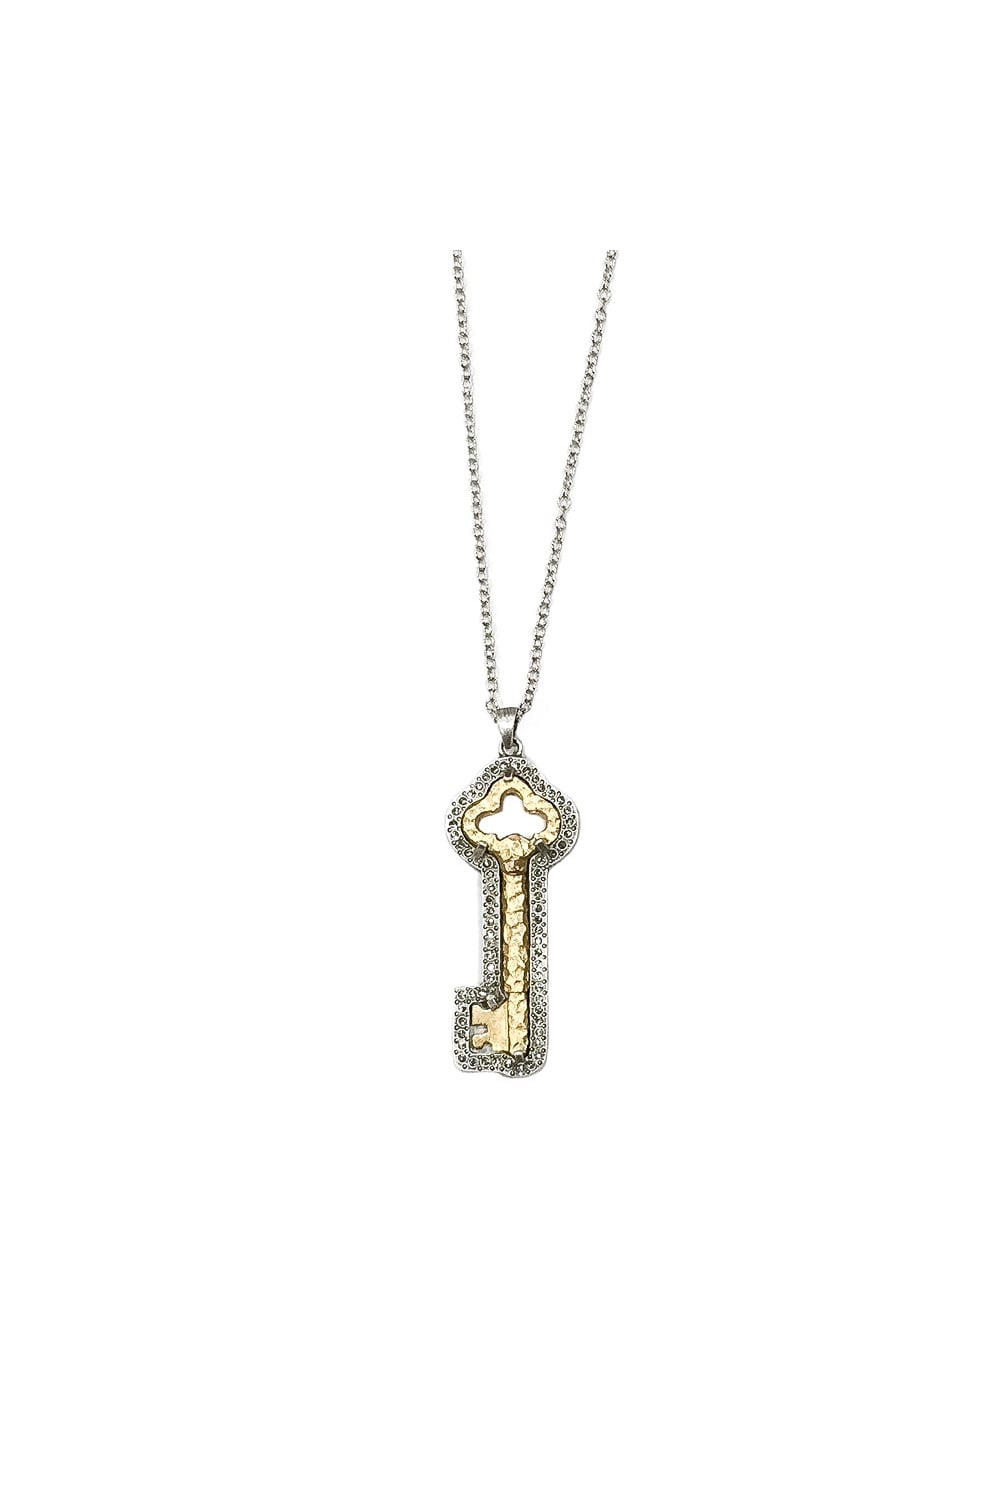 Tat2 Small Key Necklace N404